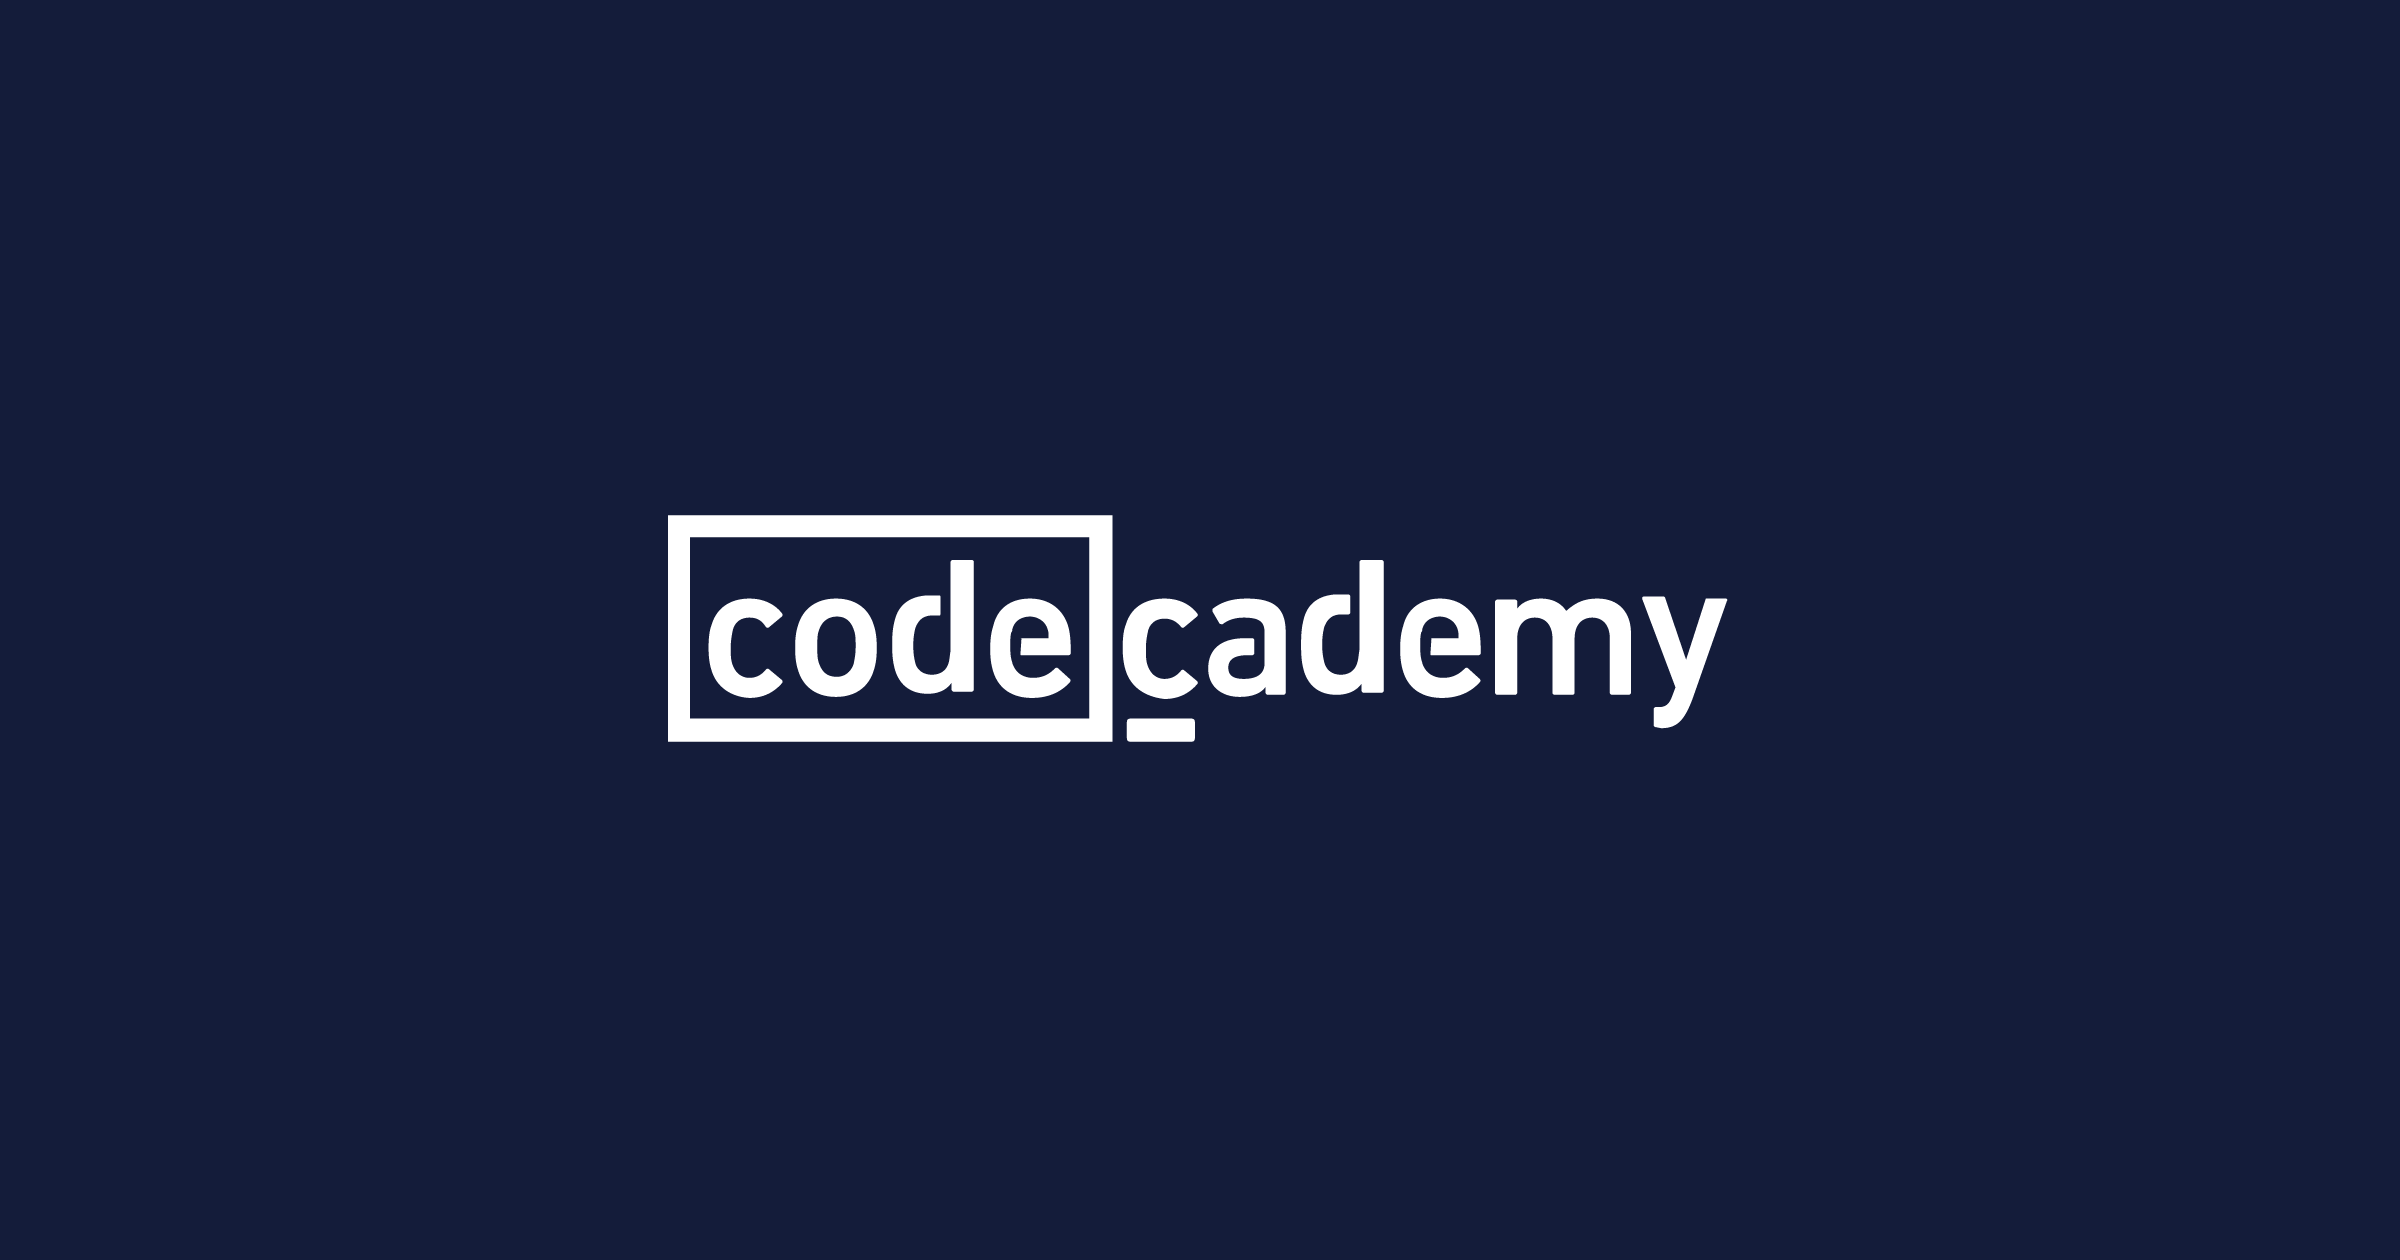 Codecademy from Skillsoft